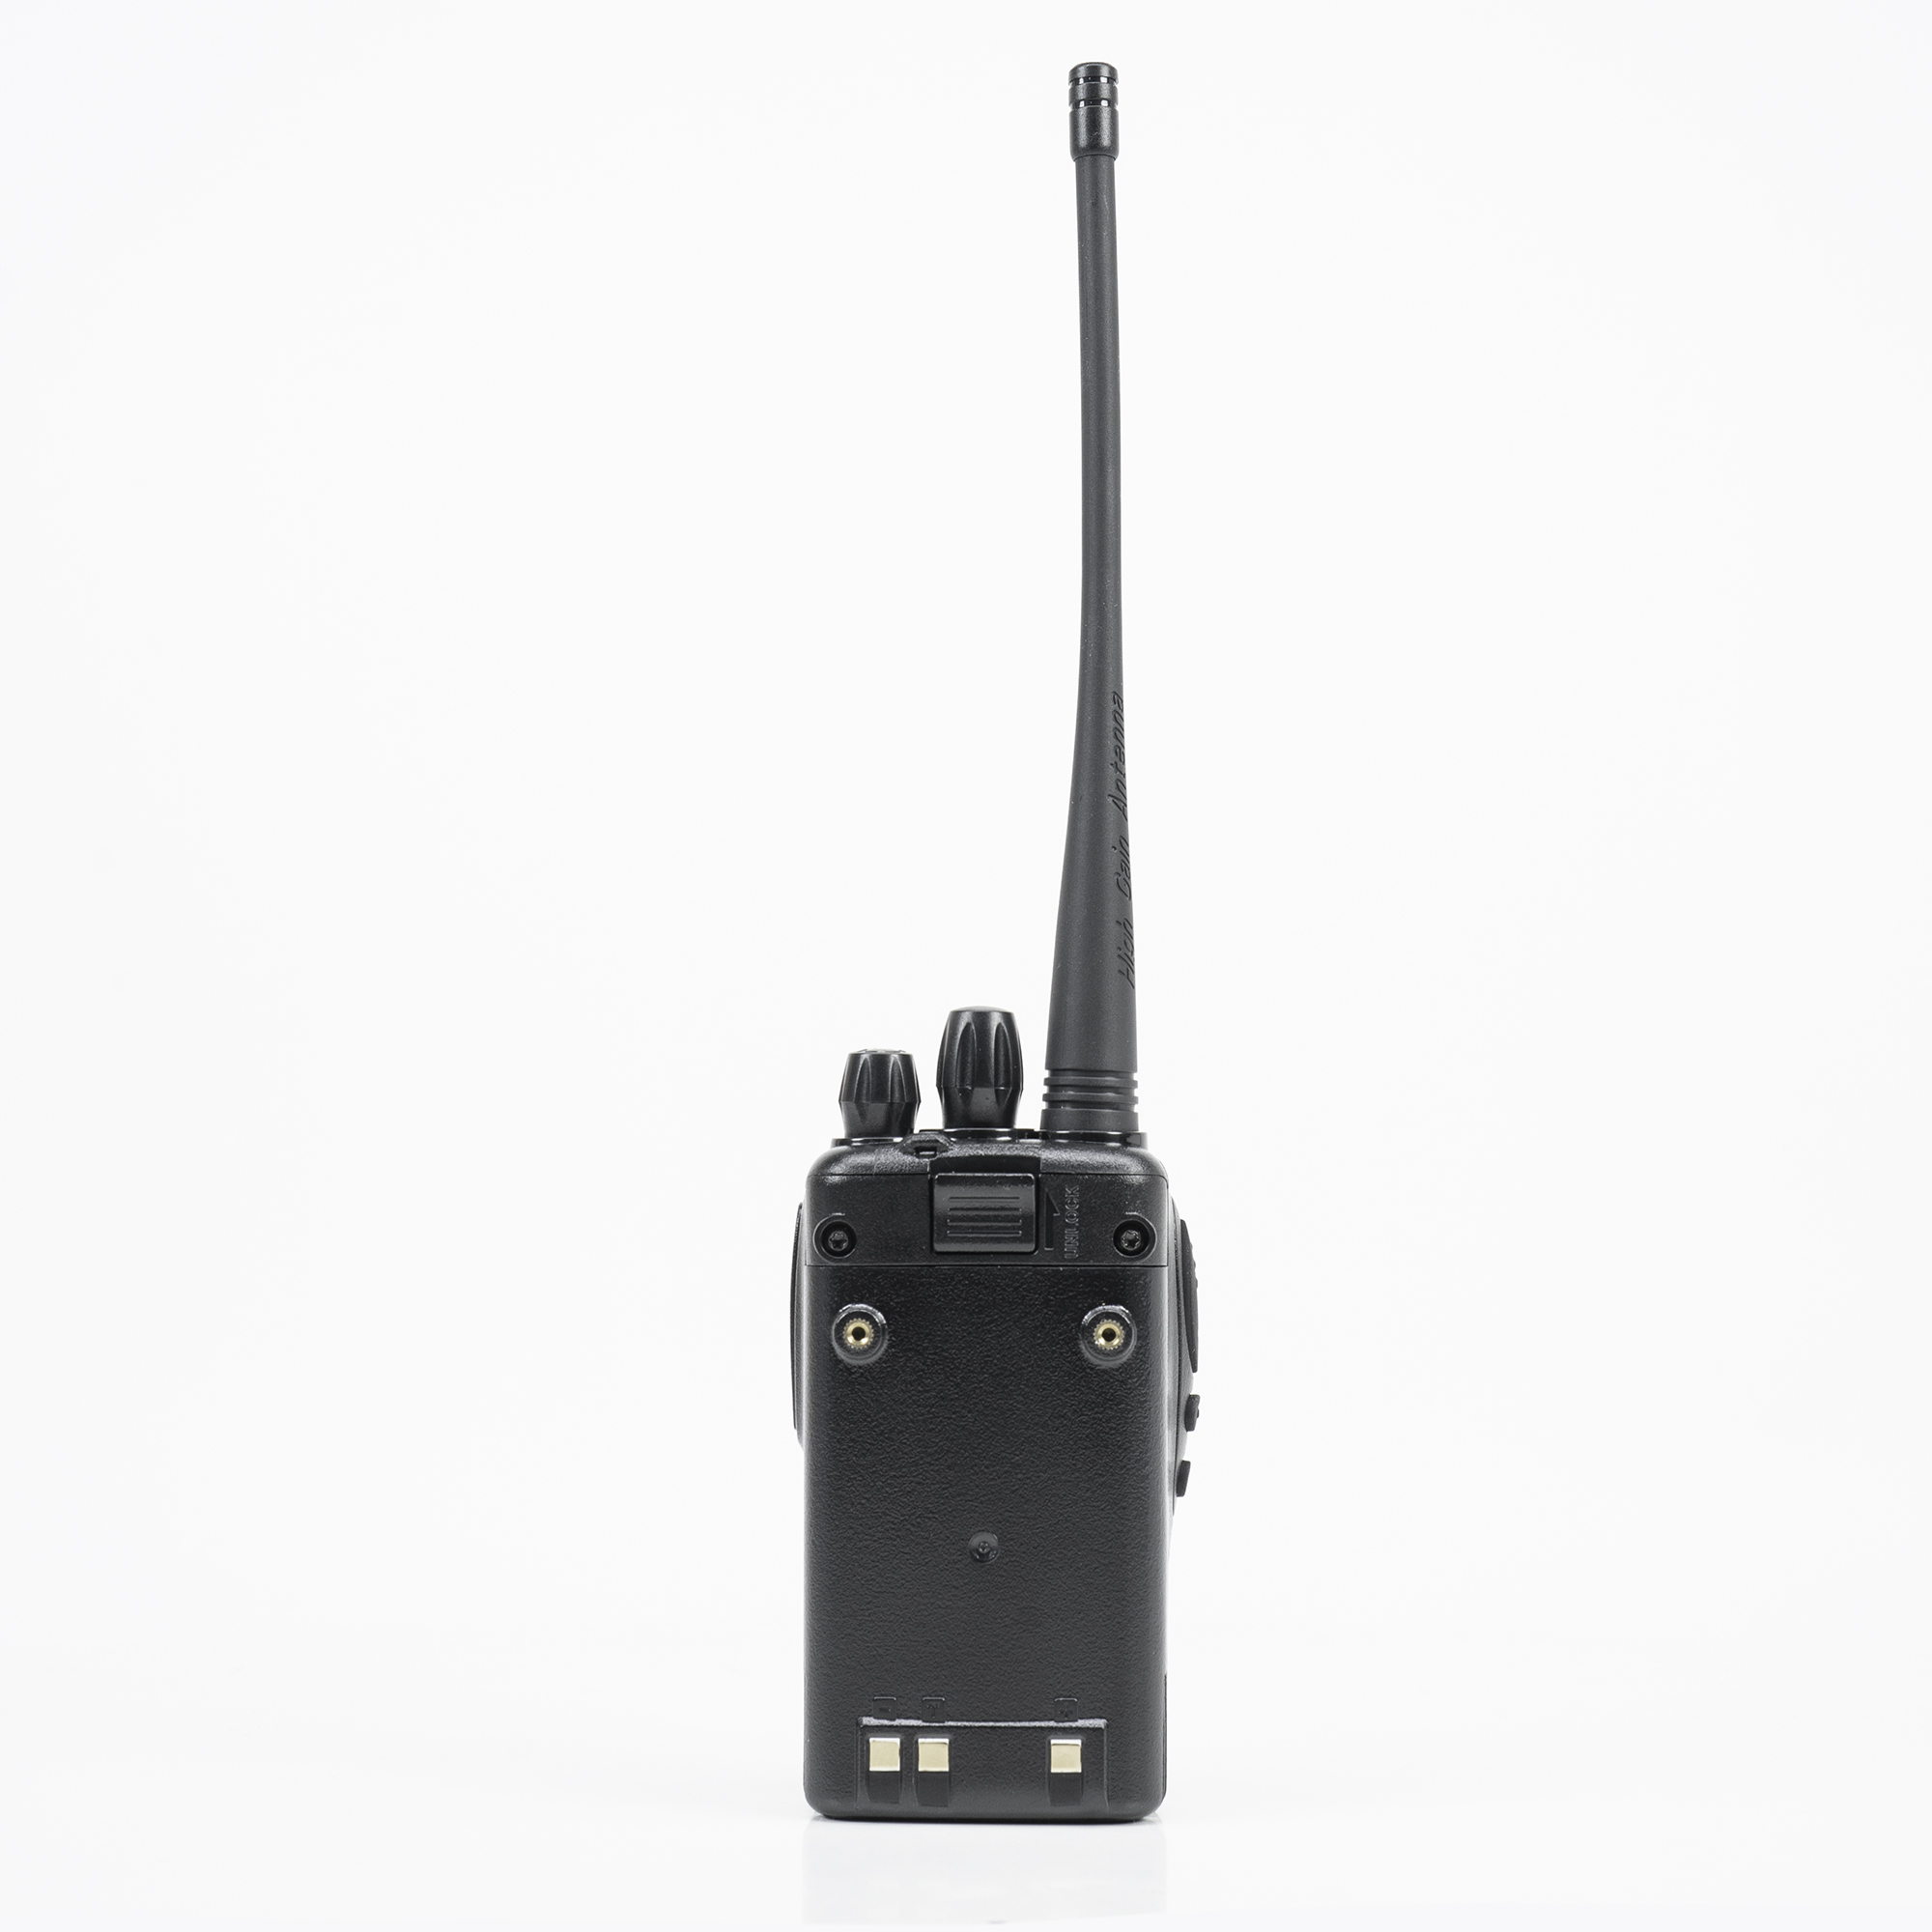 Statie radio PMR portabila CRT 8WP PMR UHF, waterproof IP67, Scan, Squelch, Vox, Radio FM image3